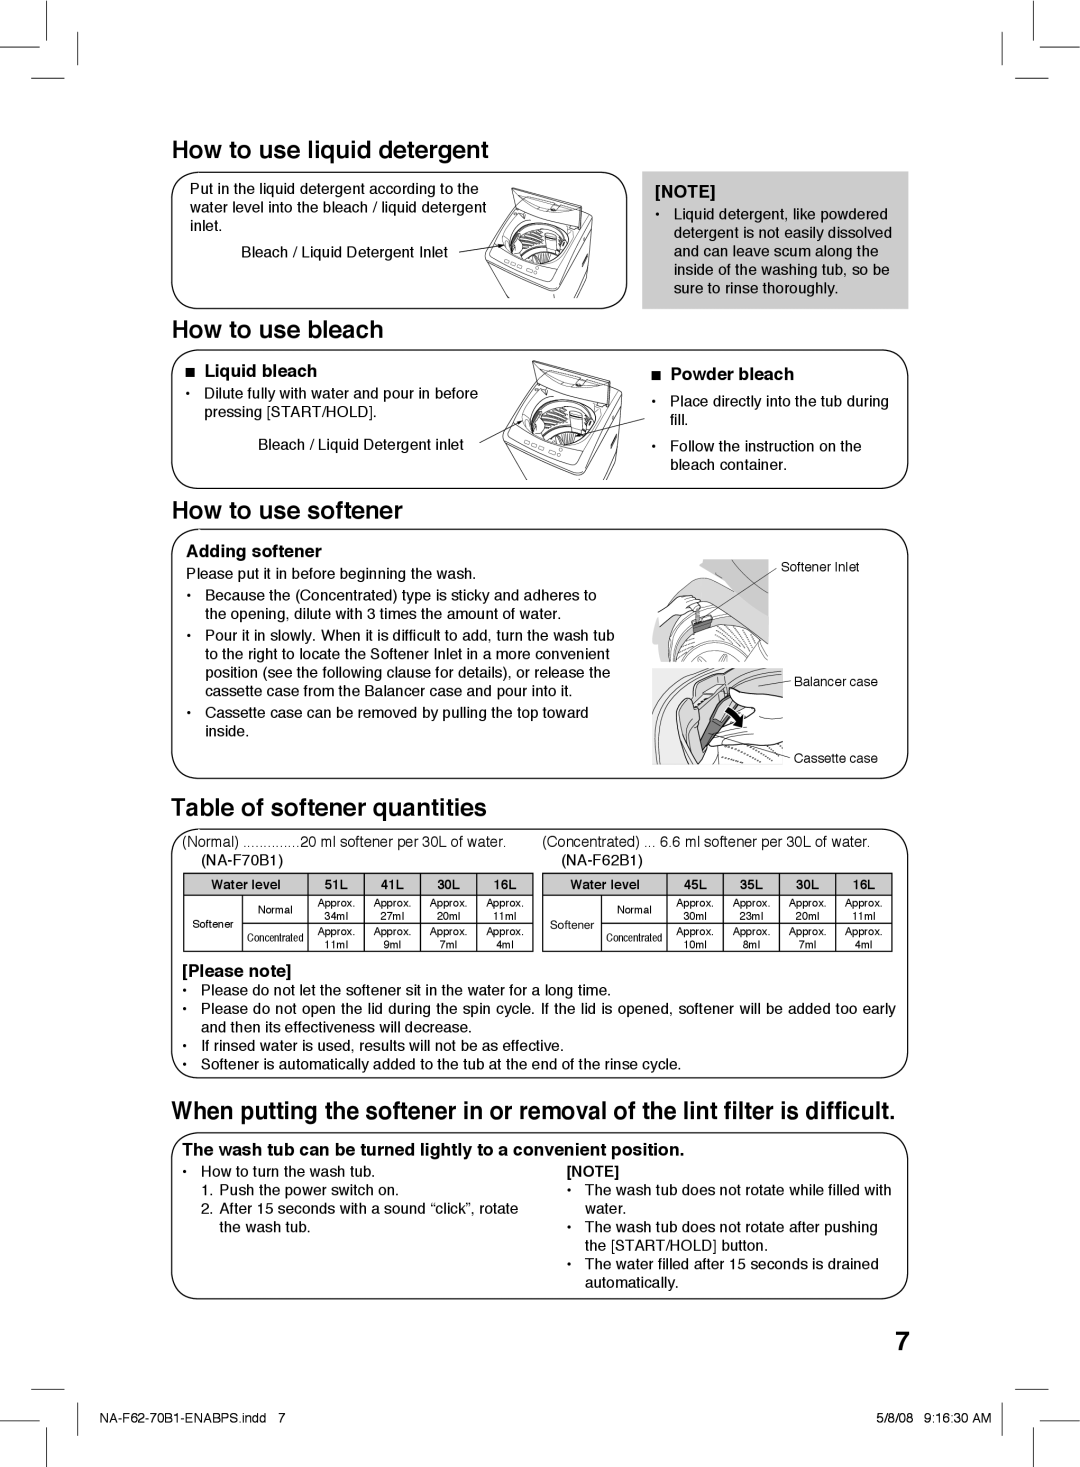 Panasonic NA-F62B1 How to use liquid detergent, How to use bleach, How to use softener, Table of softener quantities 